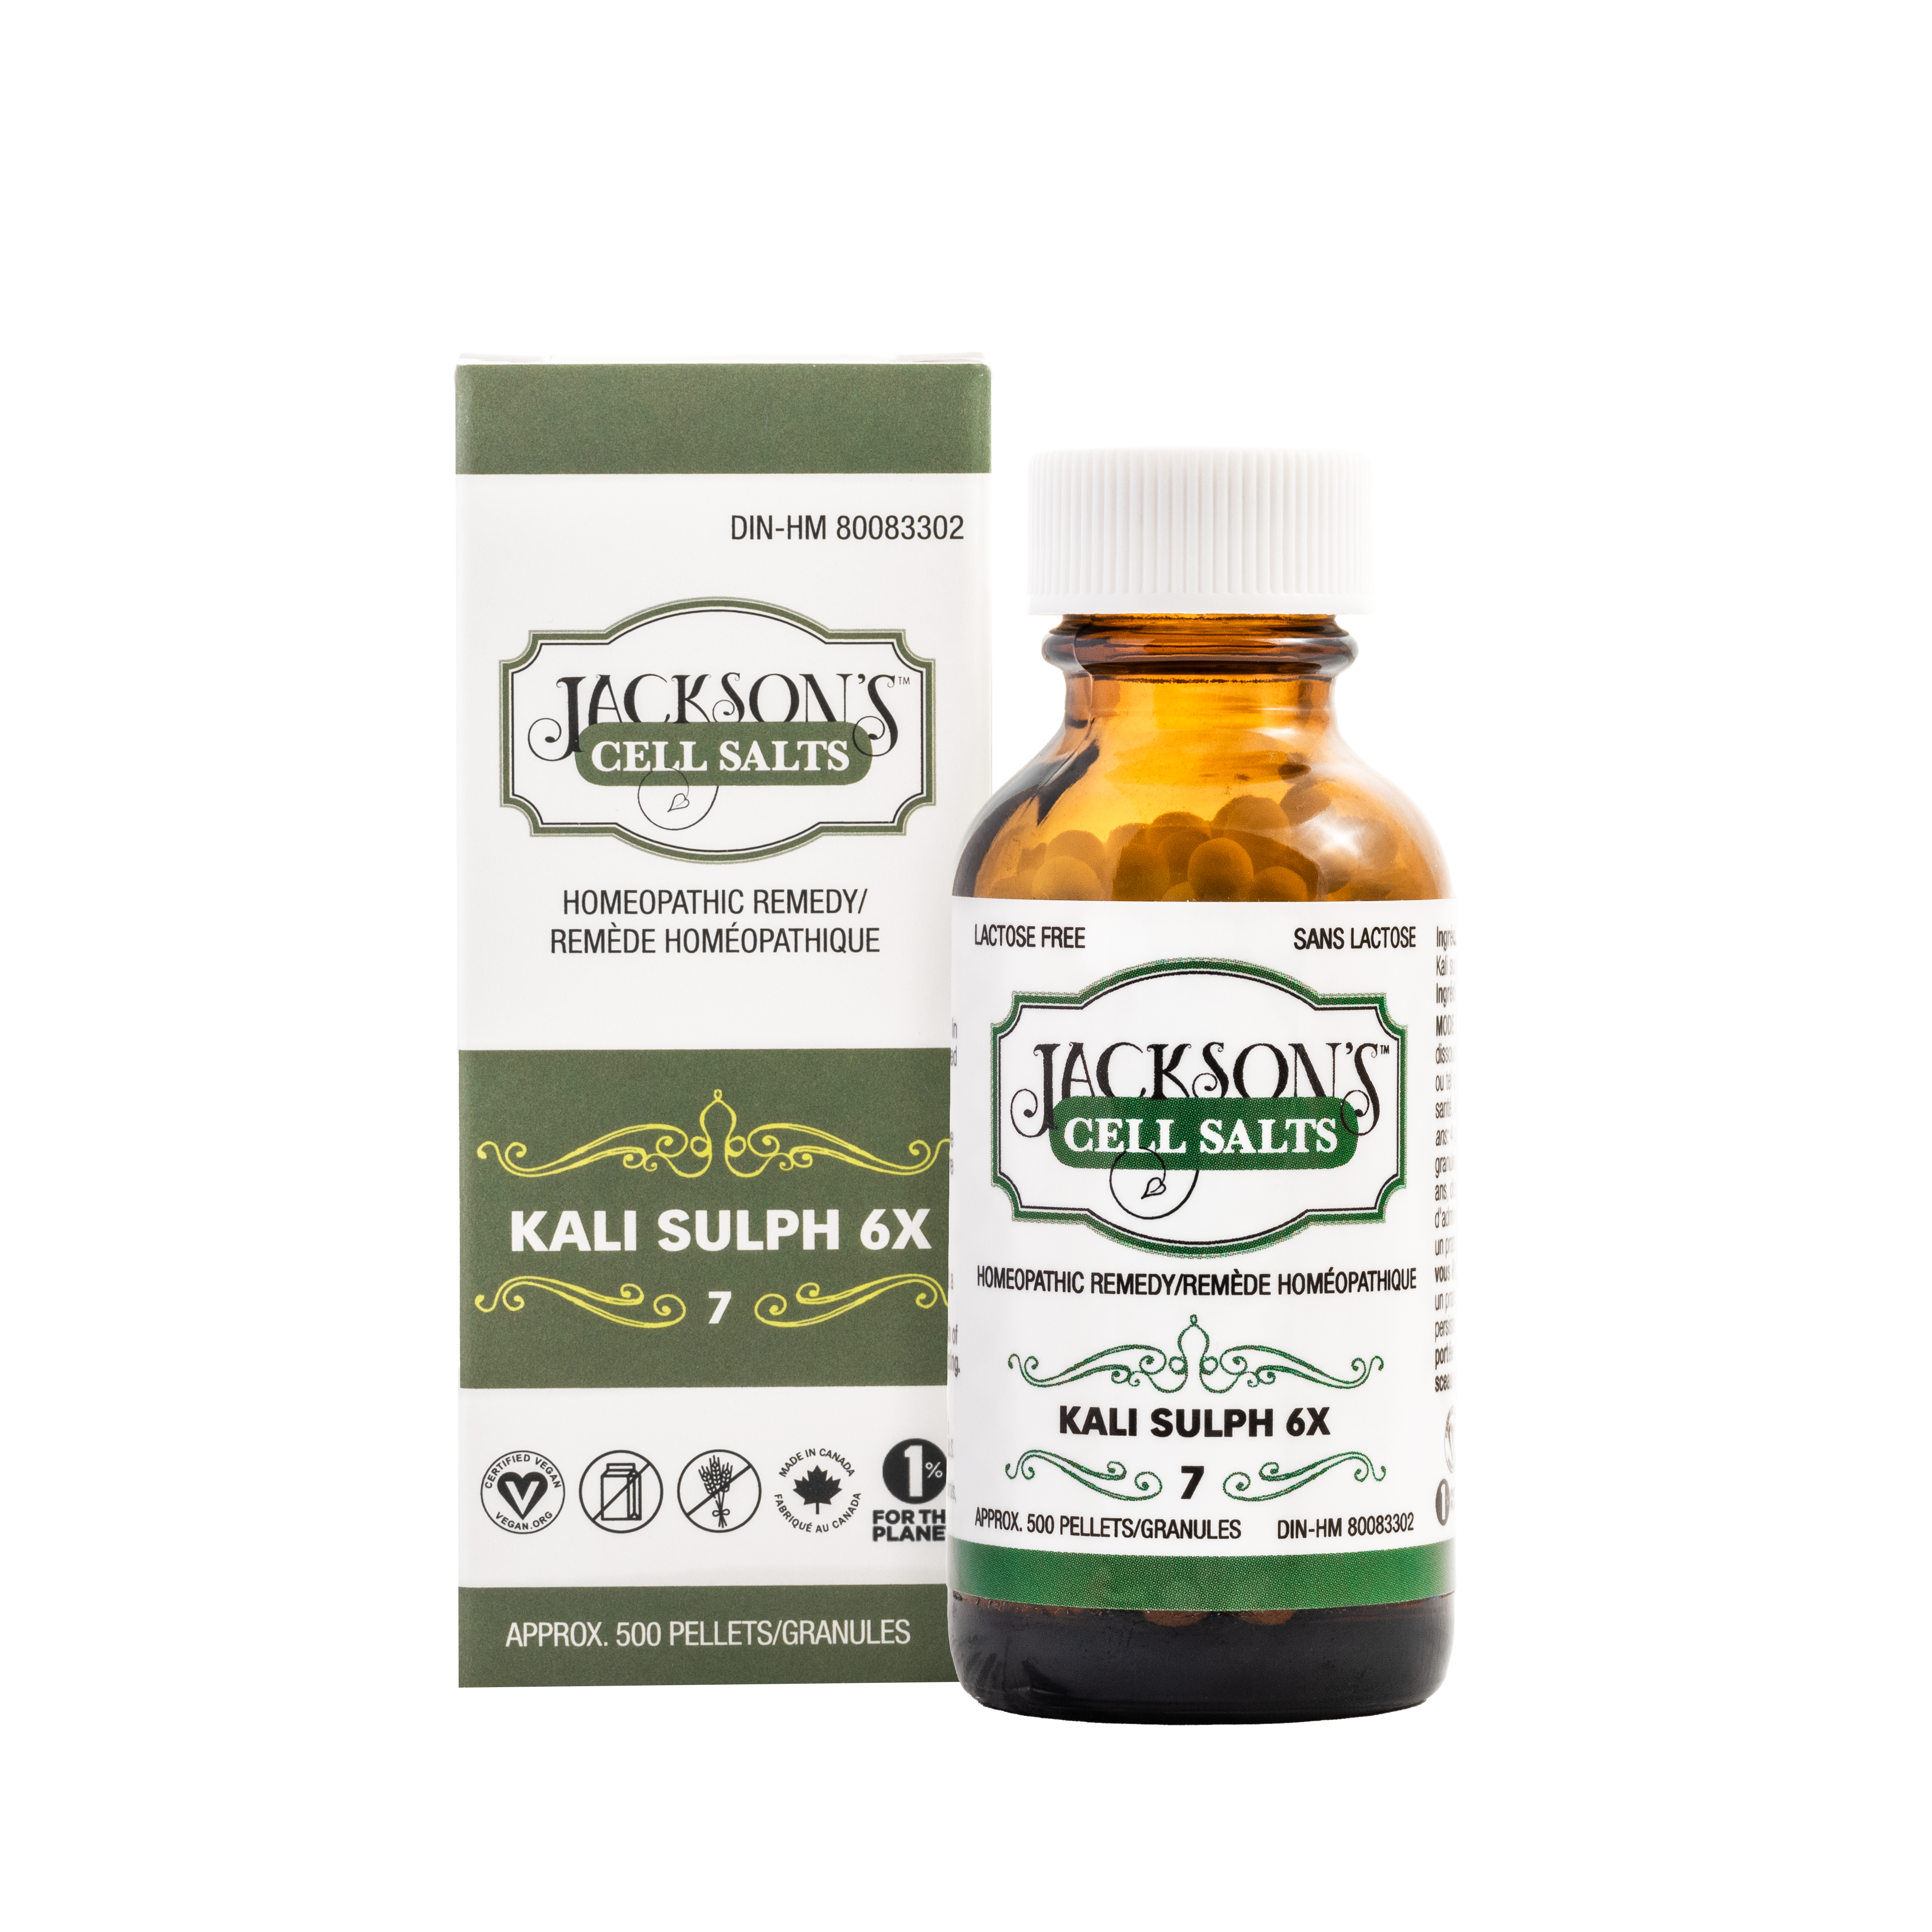 #7 Kali sulph 6X (Potassium sulfate) - Certified Vegan, Lactose-Free Schuessler Cell (Tissue) Salt